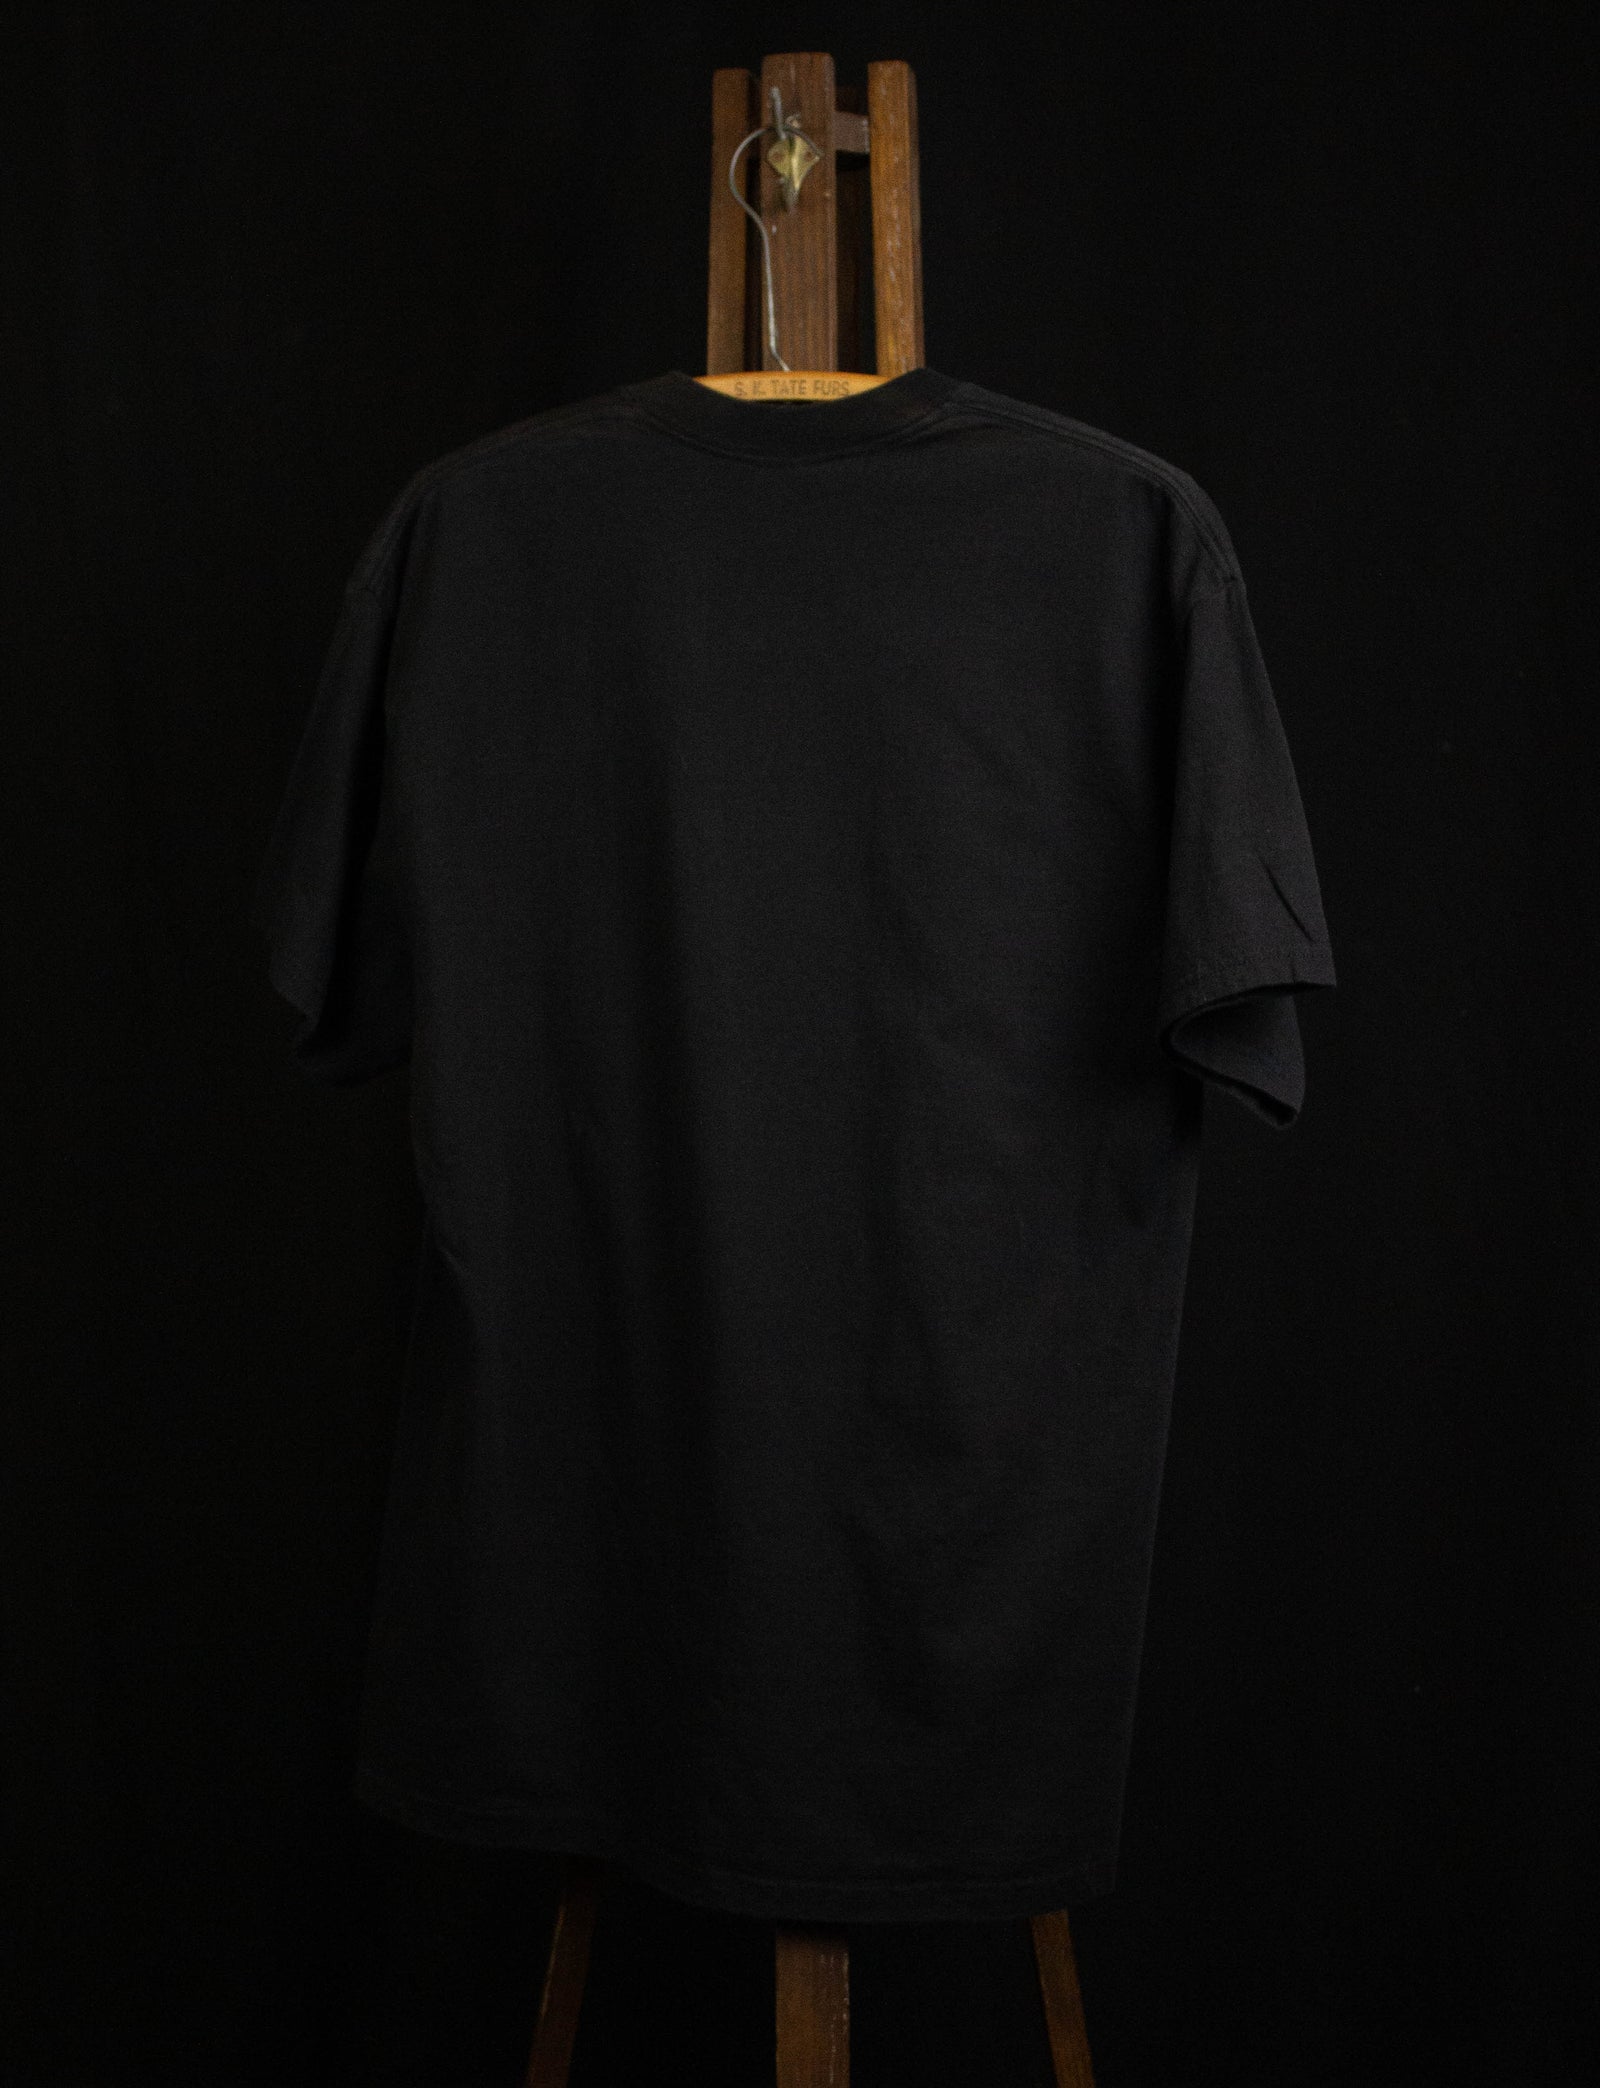 2000s Less Than Jake Concert Rockcity, USA T Shirt Black Large